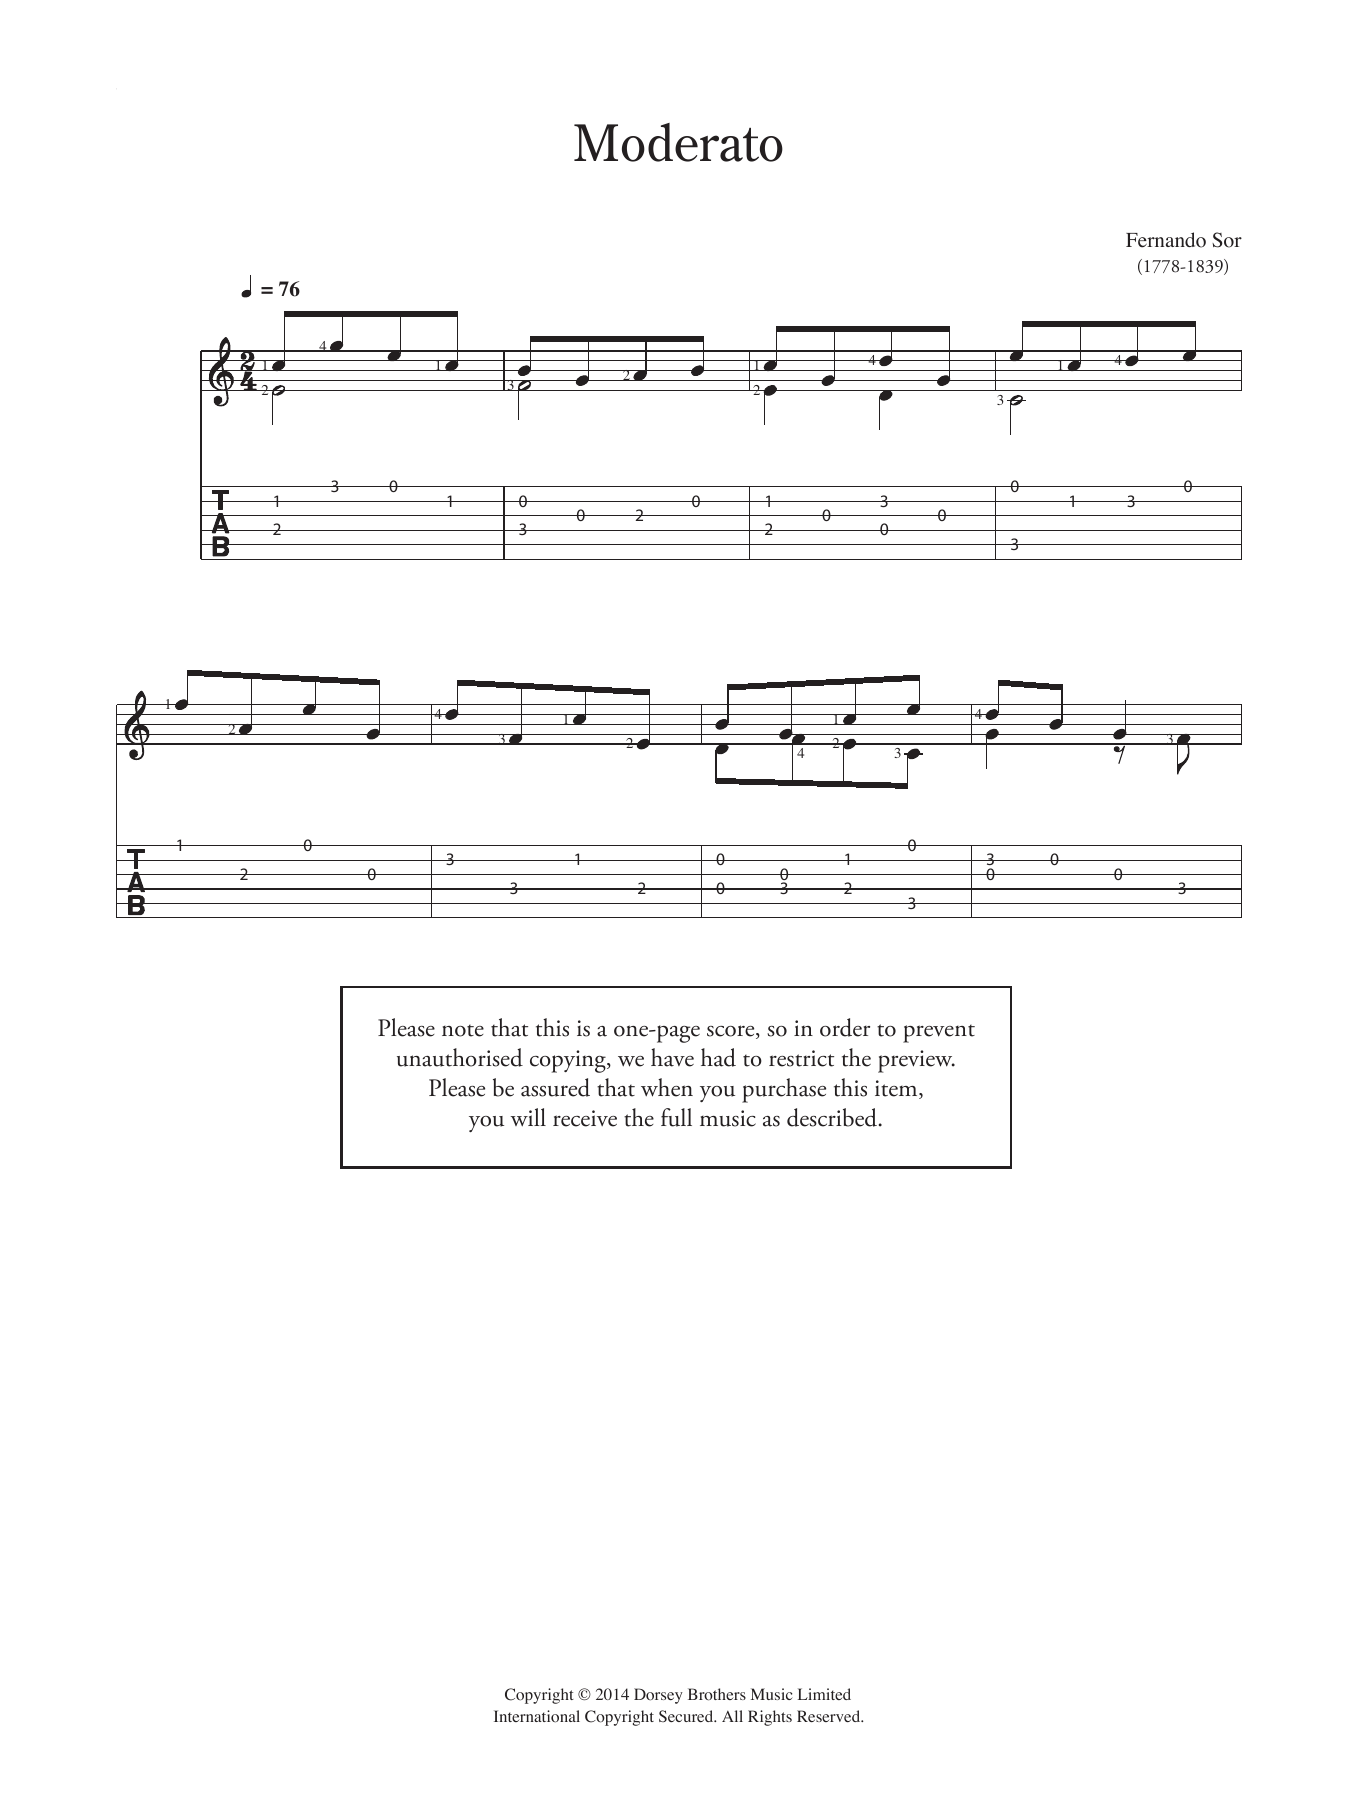 Fernando Sor Moderato Sheet Music Notes & Chords for Guitar - Download or Print PDF